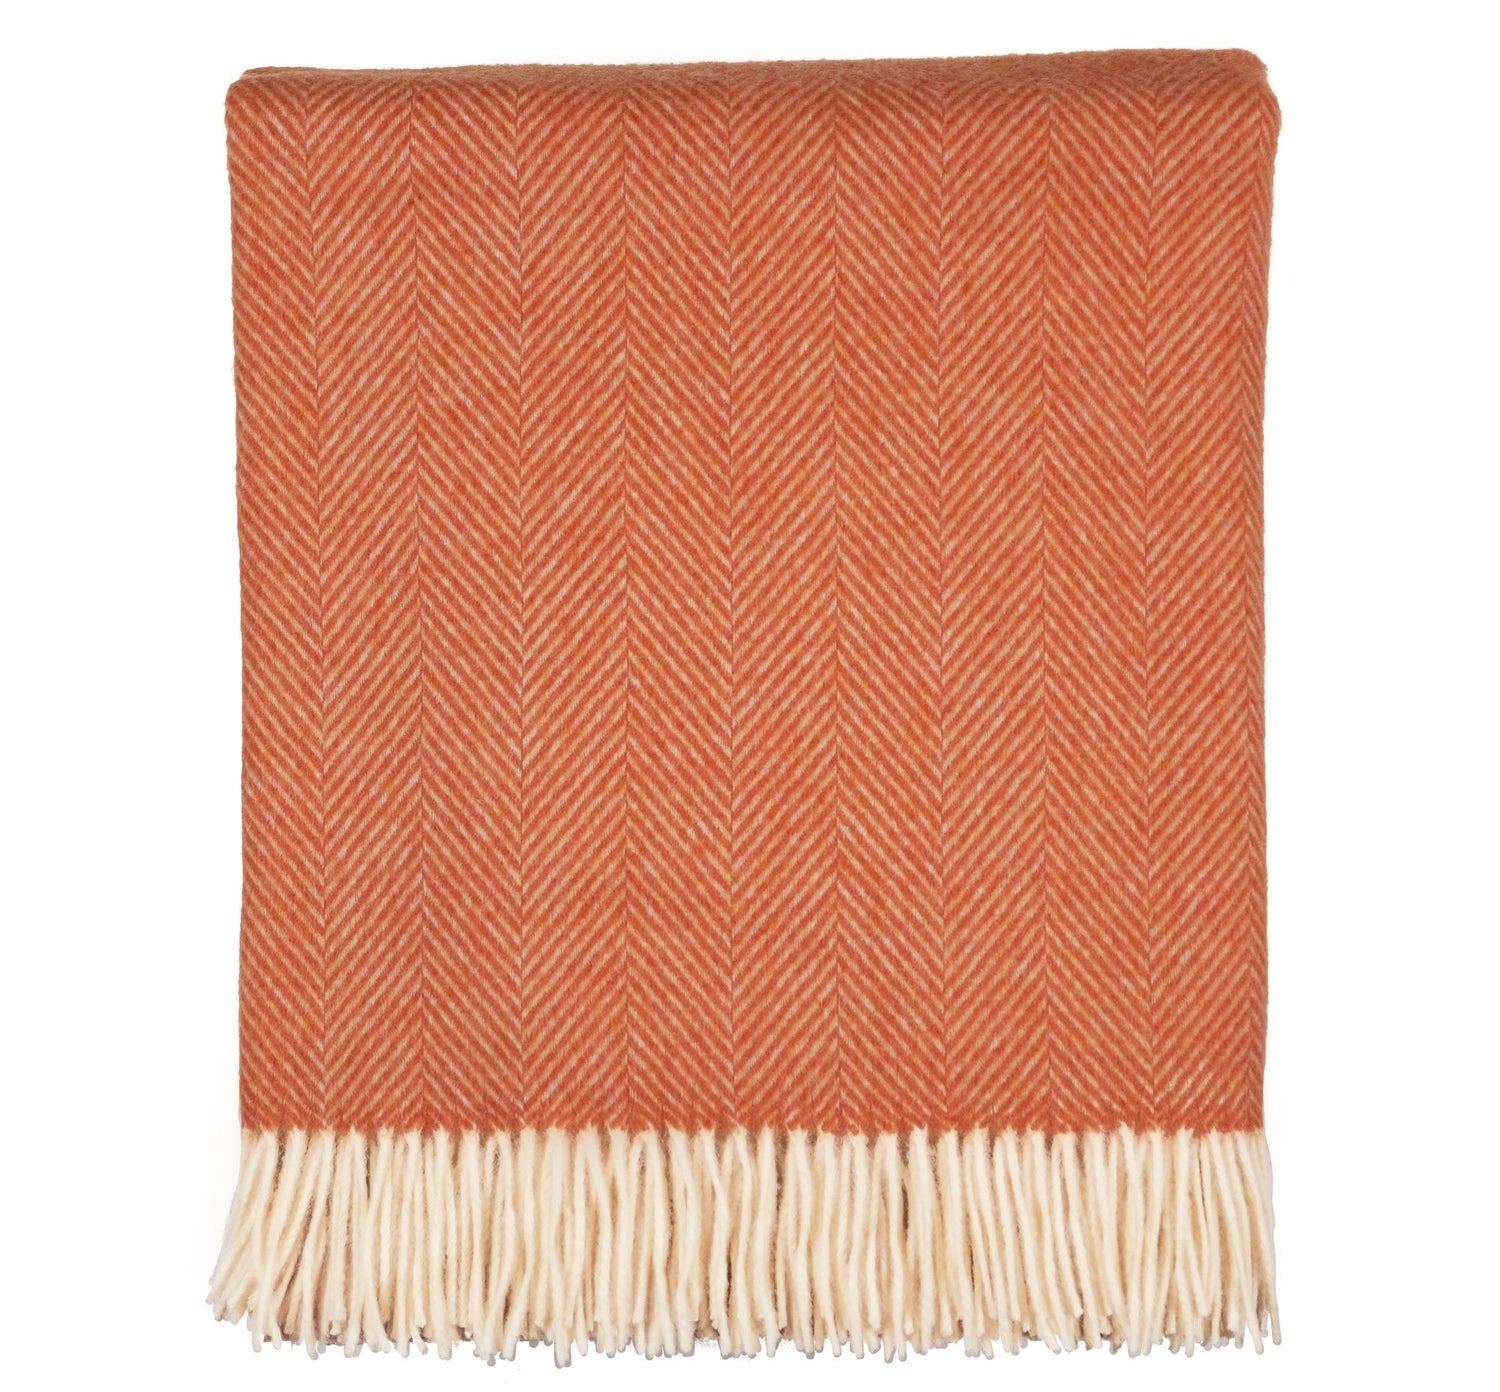 Southampton Home Merino Wool Herringbone Throw (Heirloom Tomato)-Throws and Blankets-Q029004-Prince of Scots